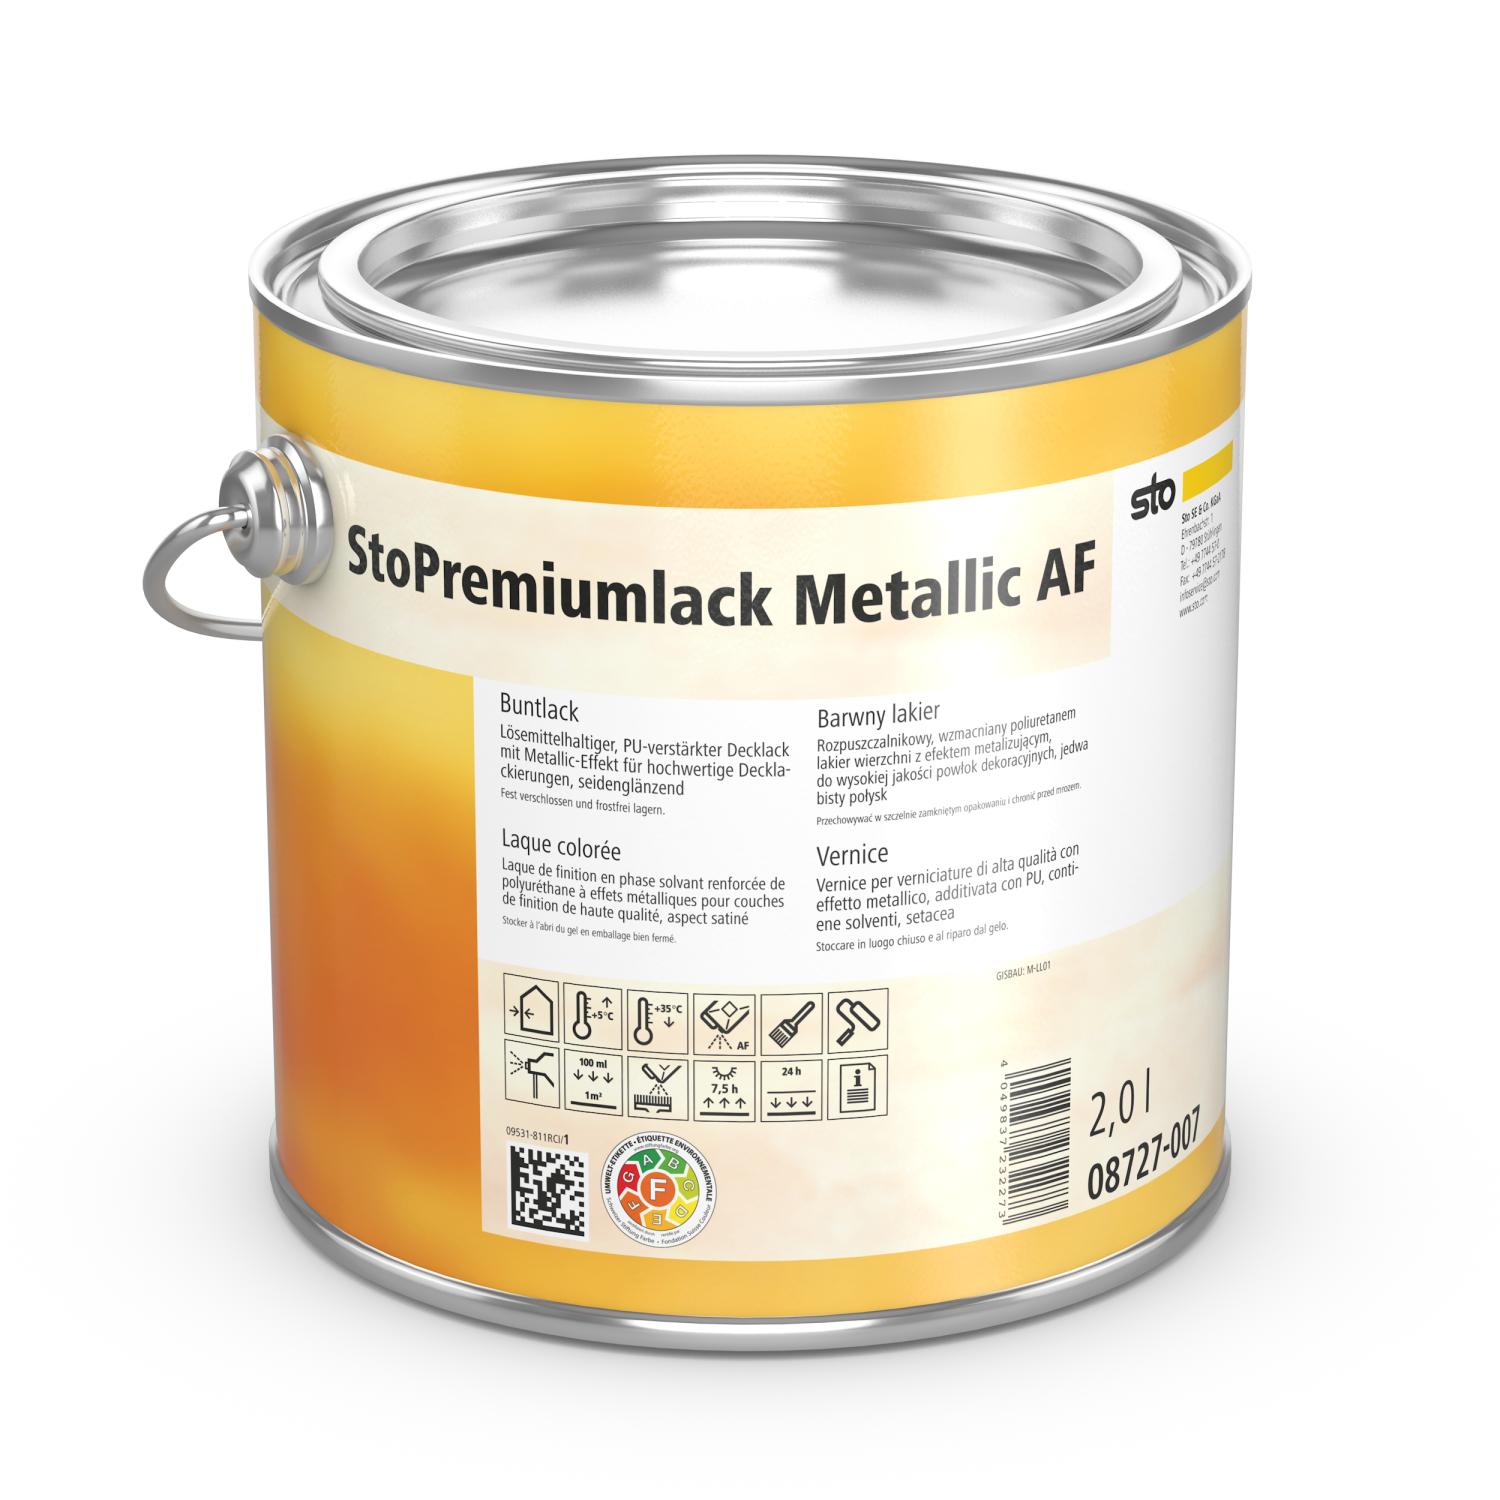 StoPremiumlack Metallic AF getönt - 2 l Dose